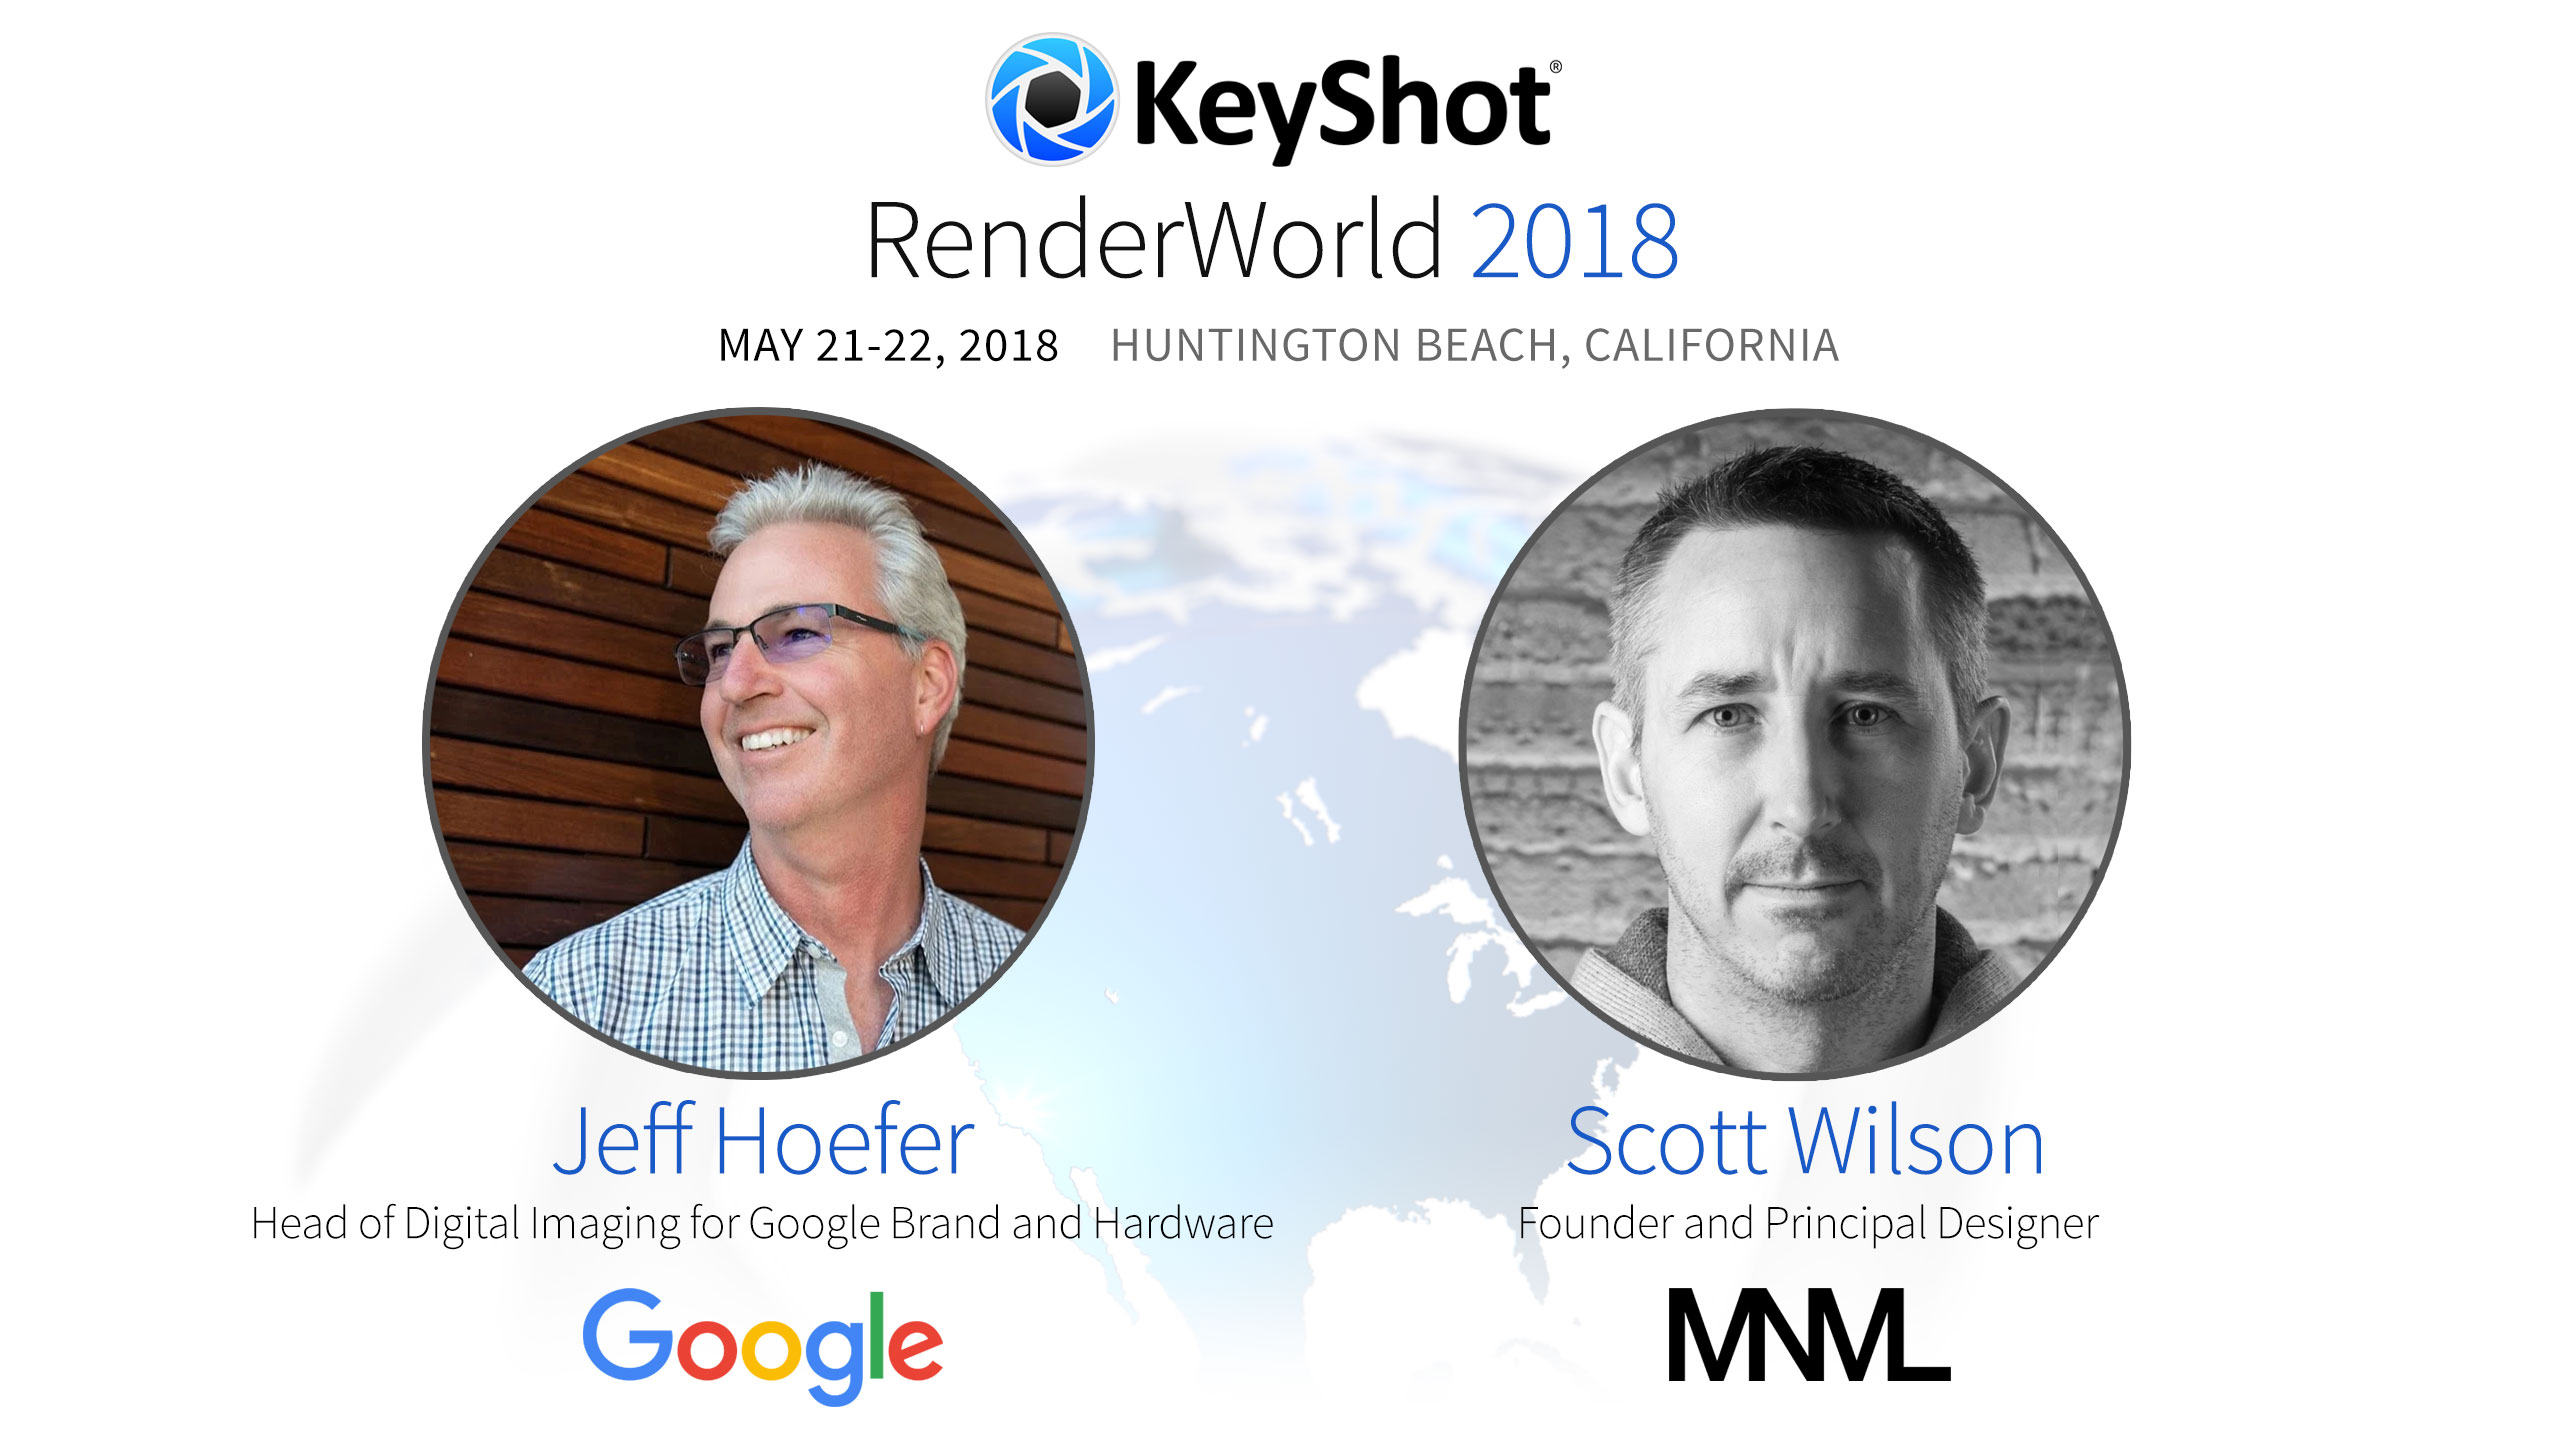 Google and MNML Guest Keynote Speakers for KeyShot RenderWorld 2018